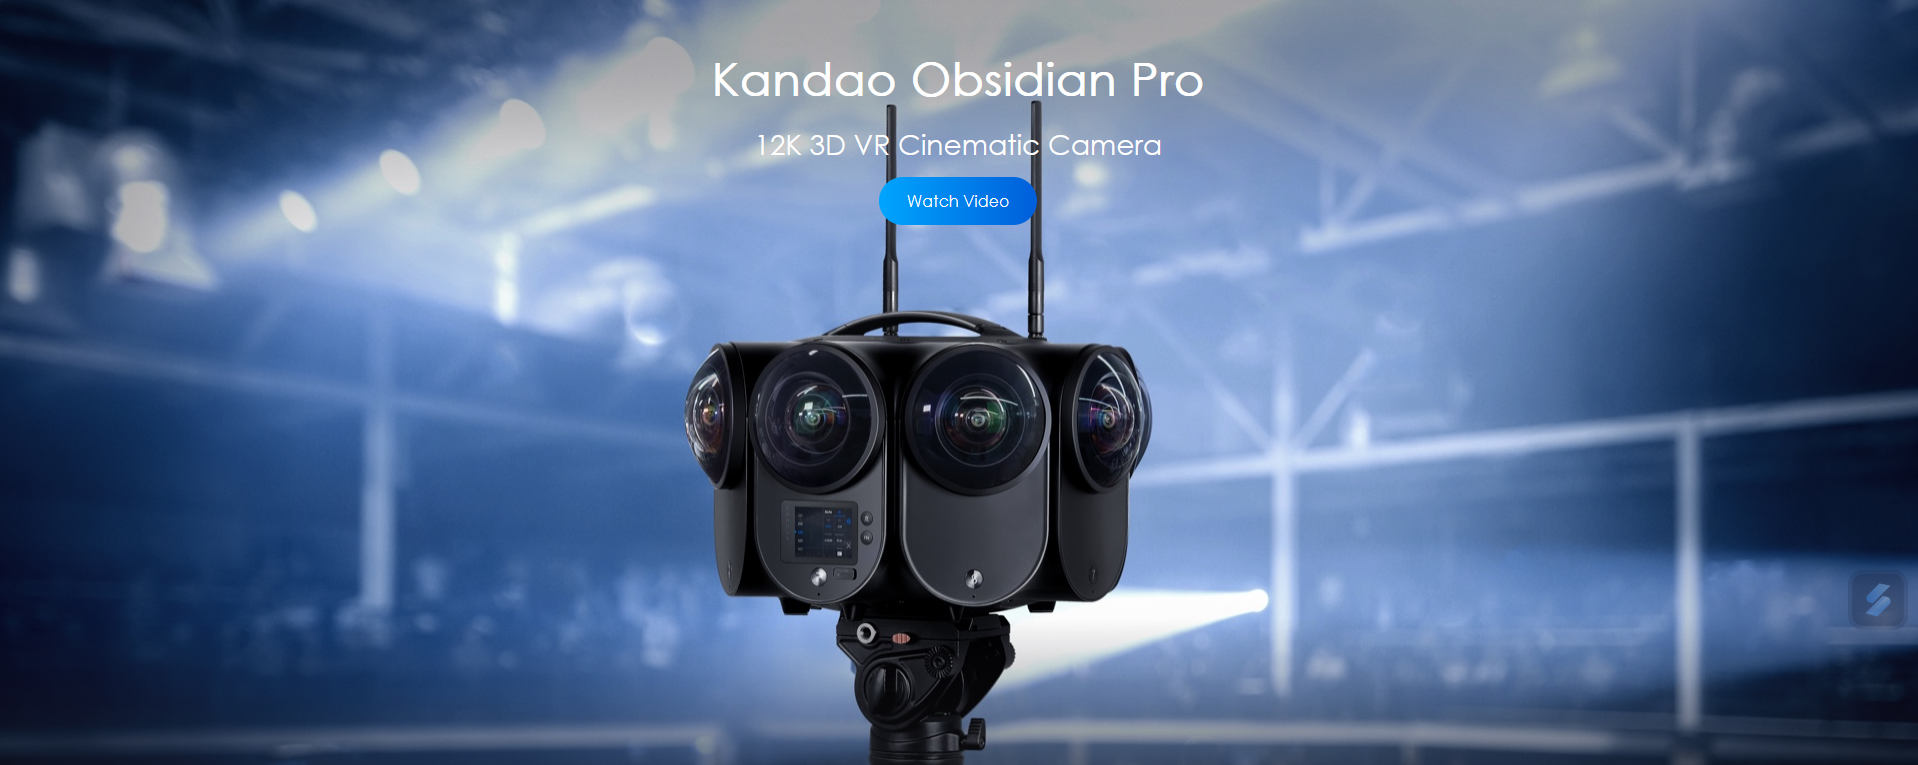 Kandao Obsidian pro 12K 3D VR Cinematic Camera-001